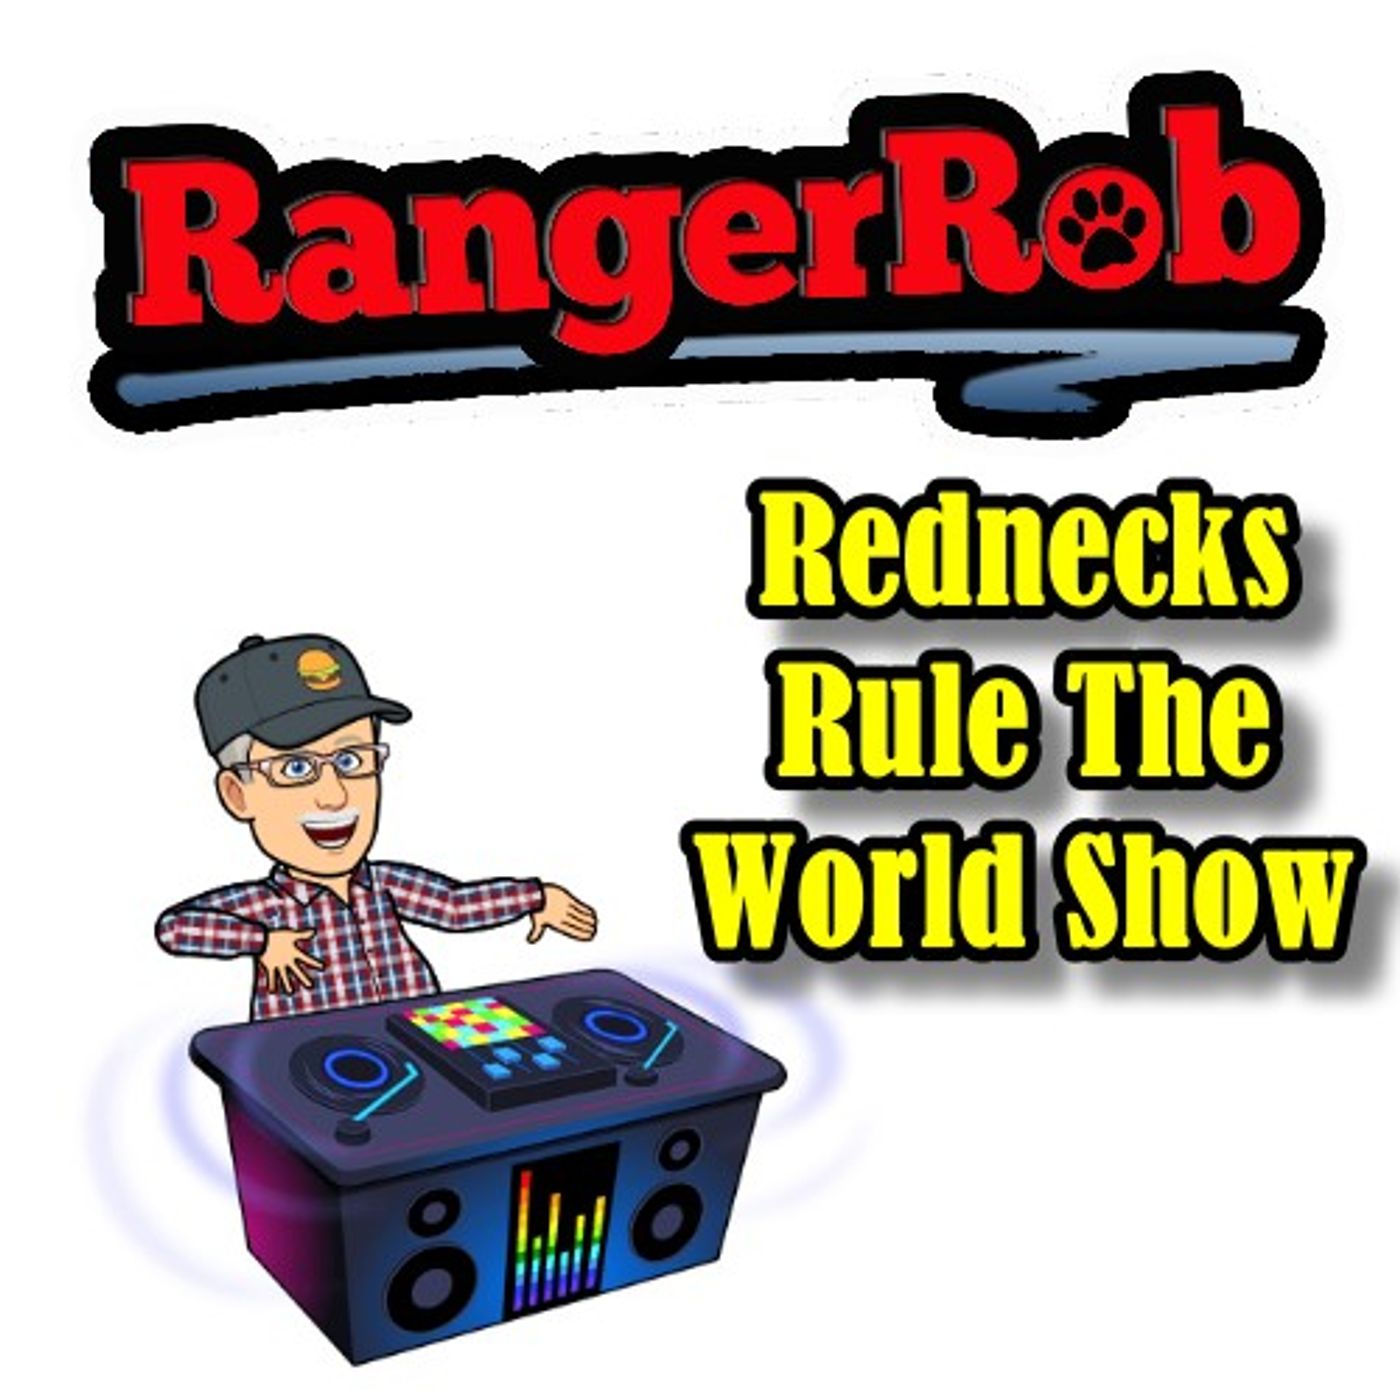 Rangerrob Rednecks Rule The World Show